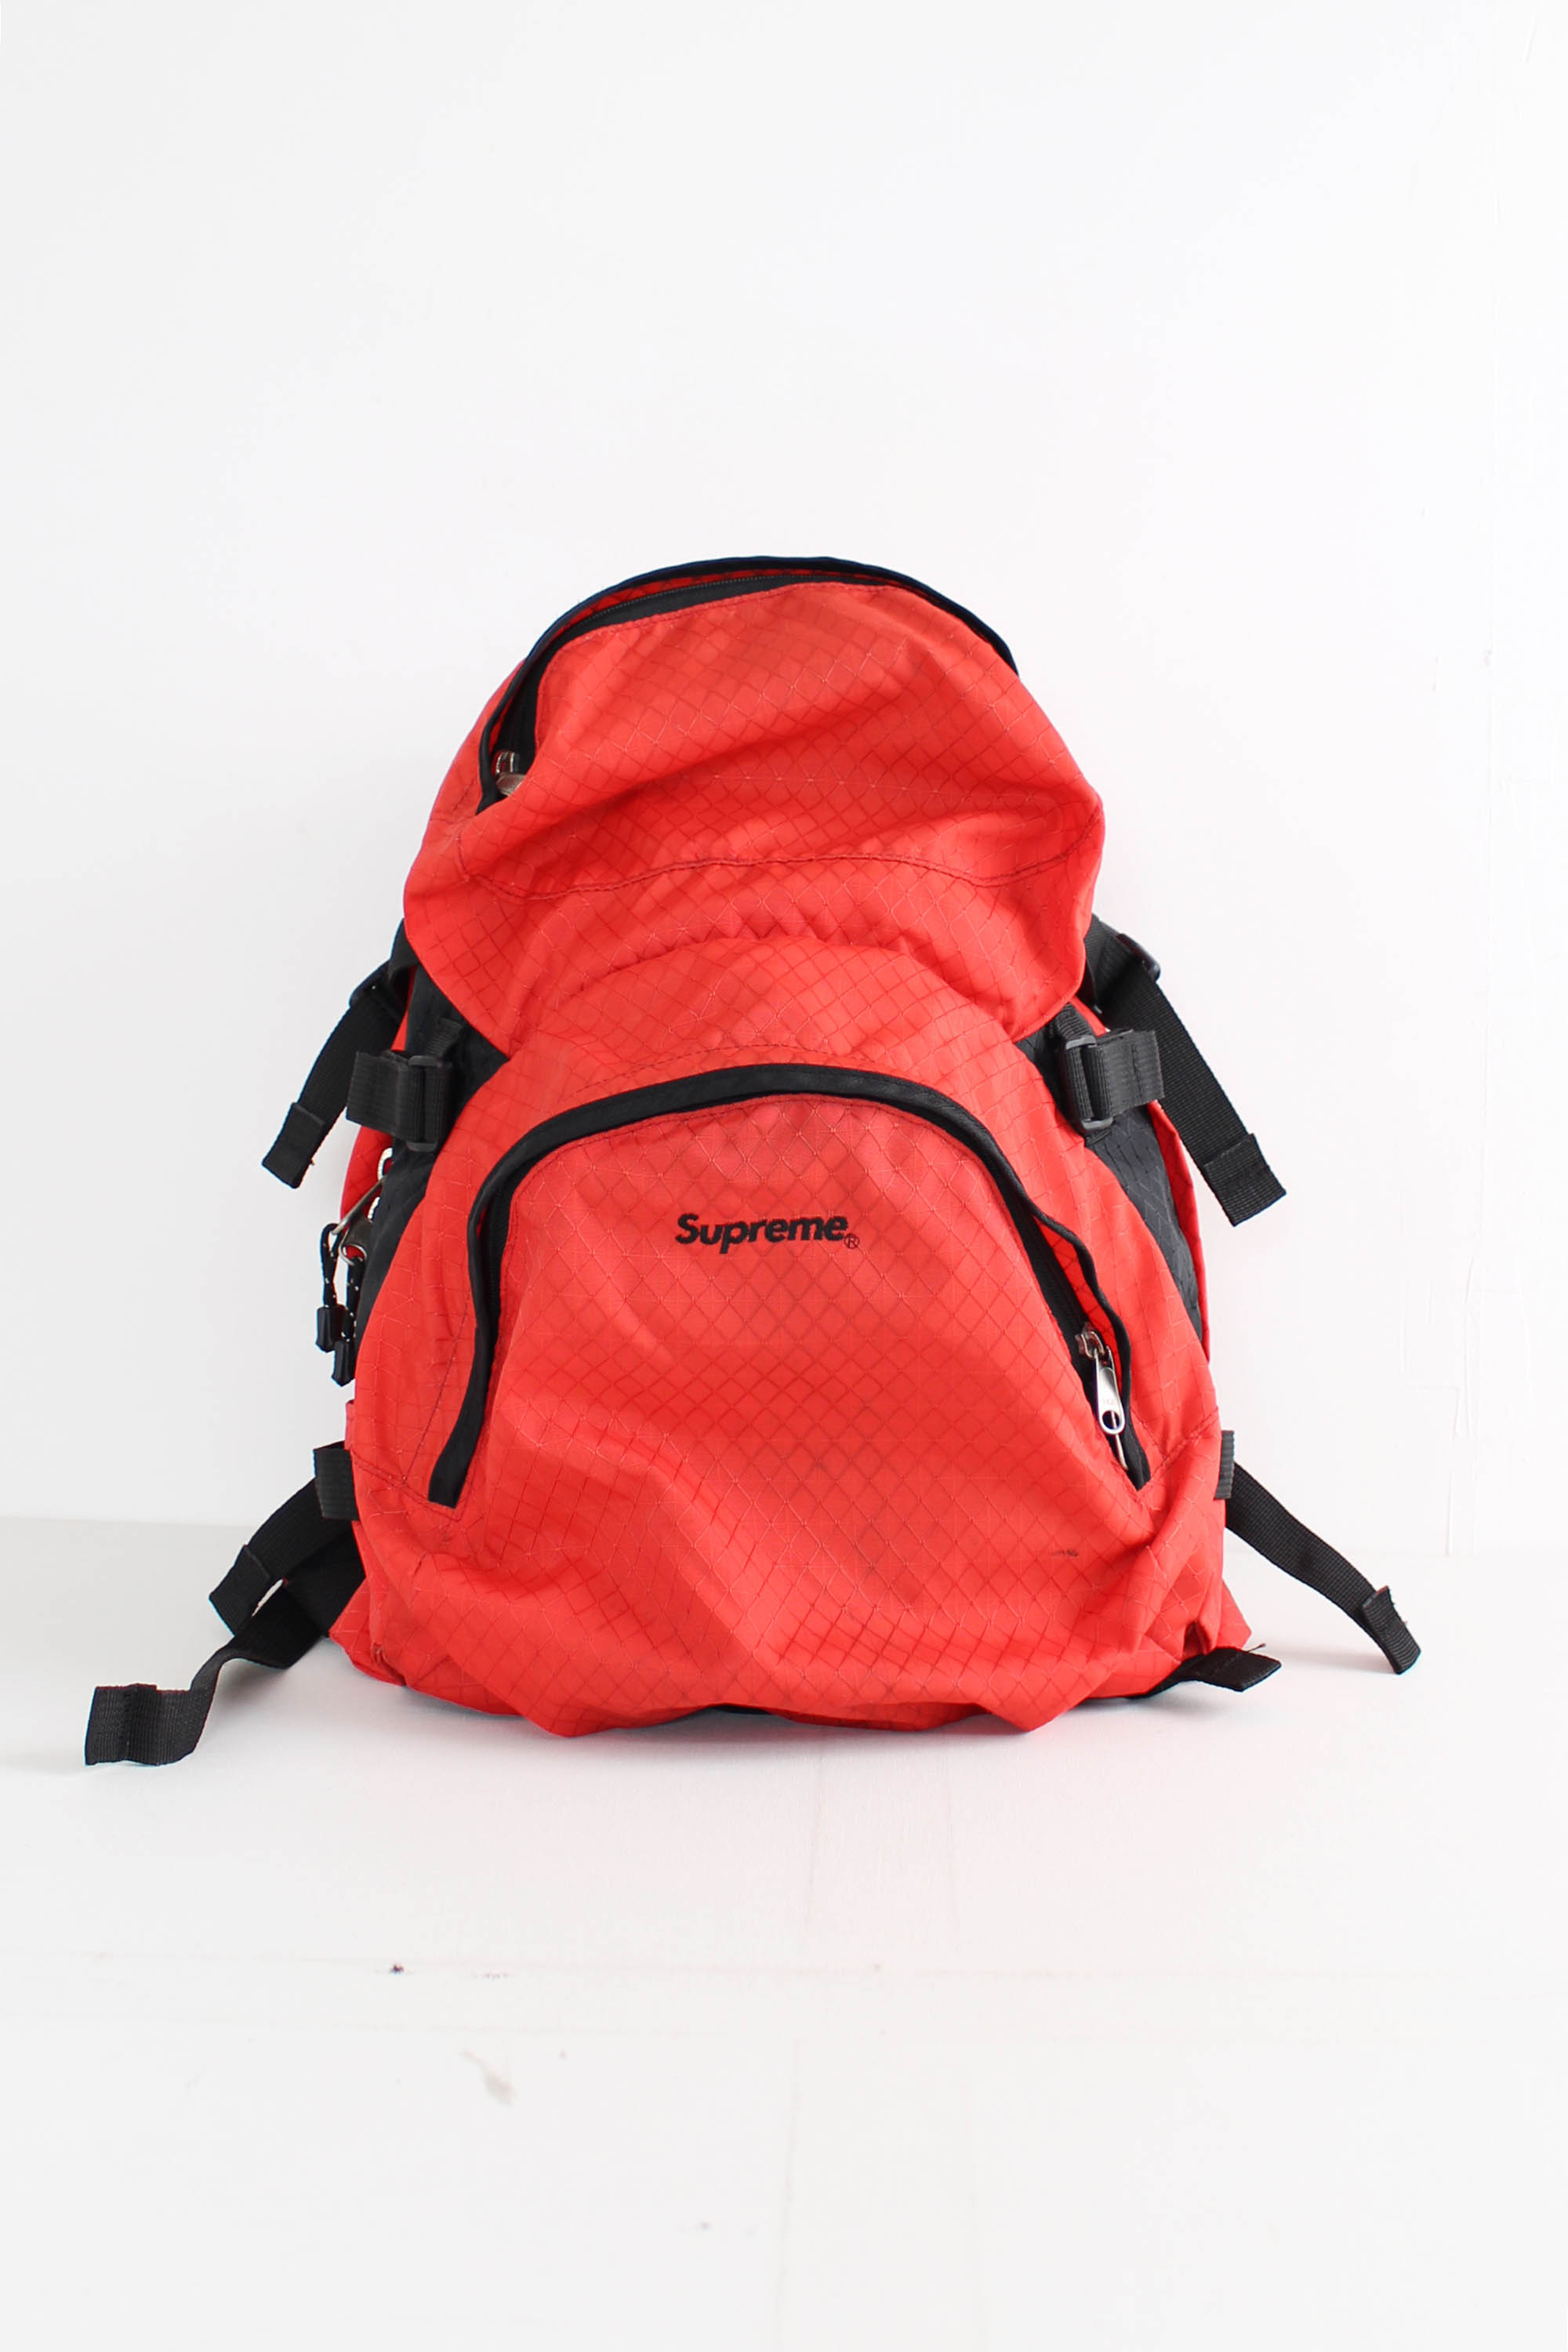 1998 SUPREME backpack